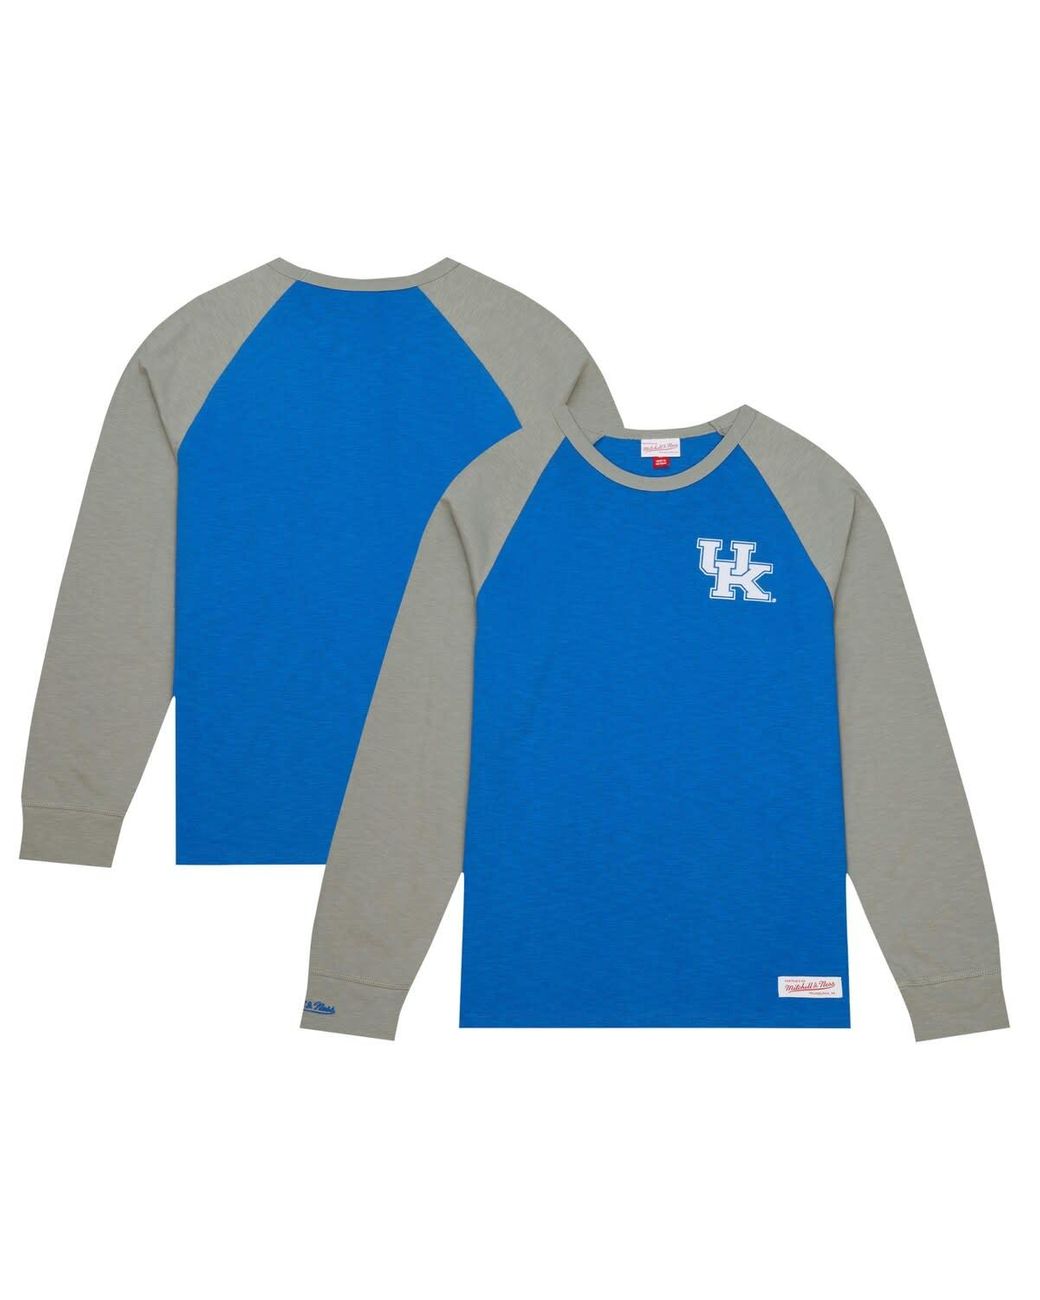 Los Angeles Dodgers Mitchell & Ness Slub Long Sleeve T-Shirt - Royal